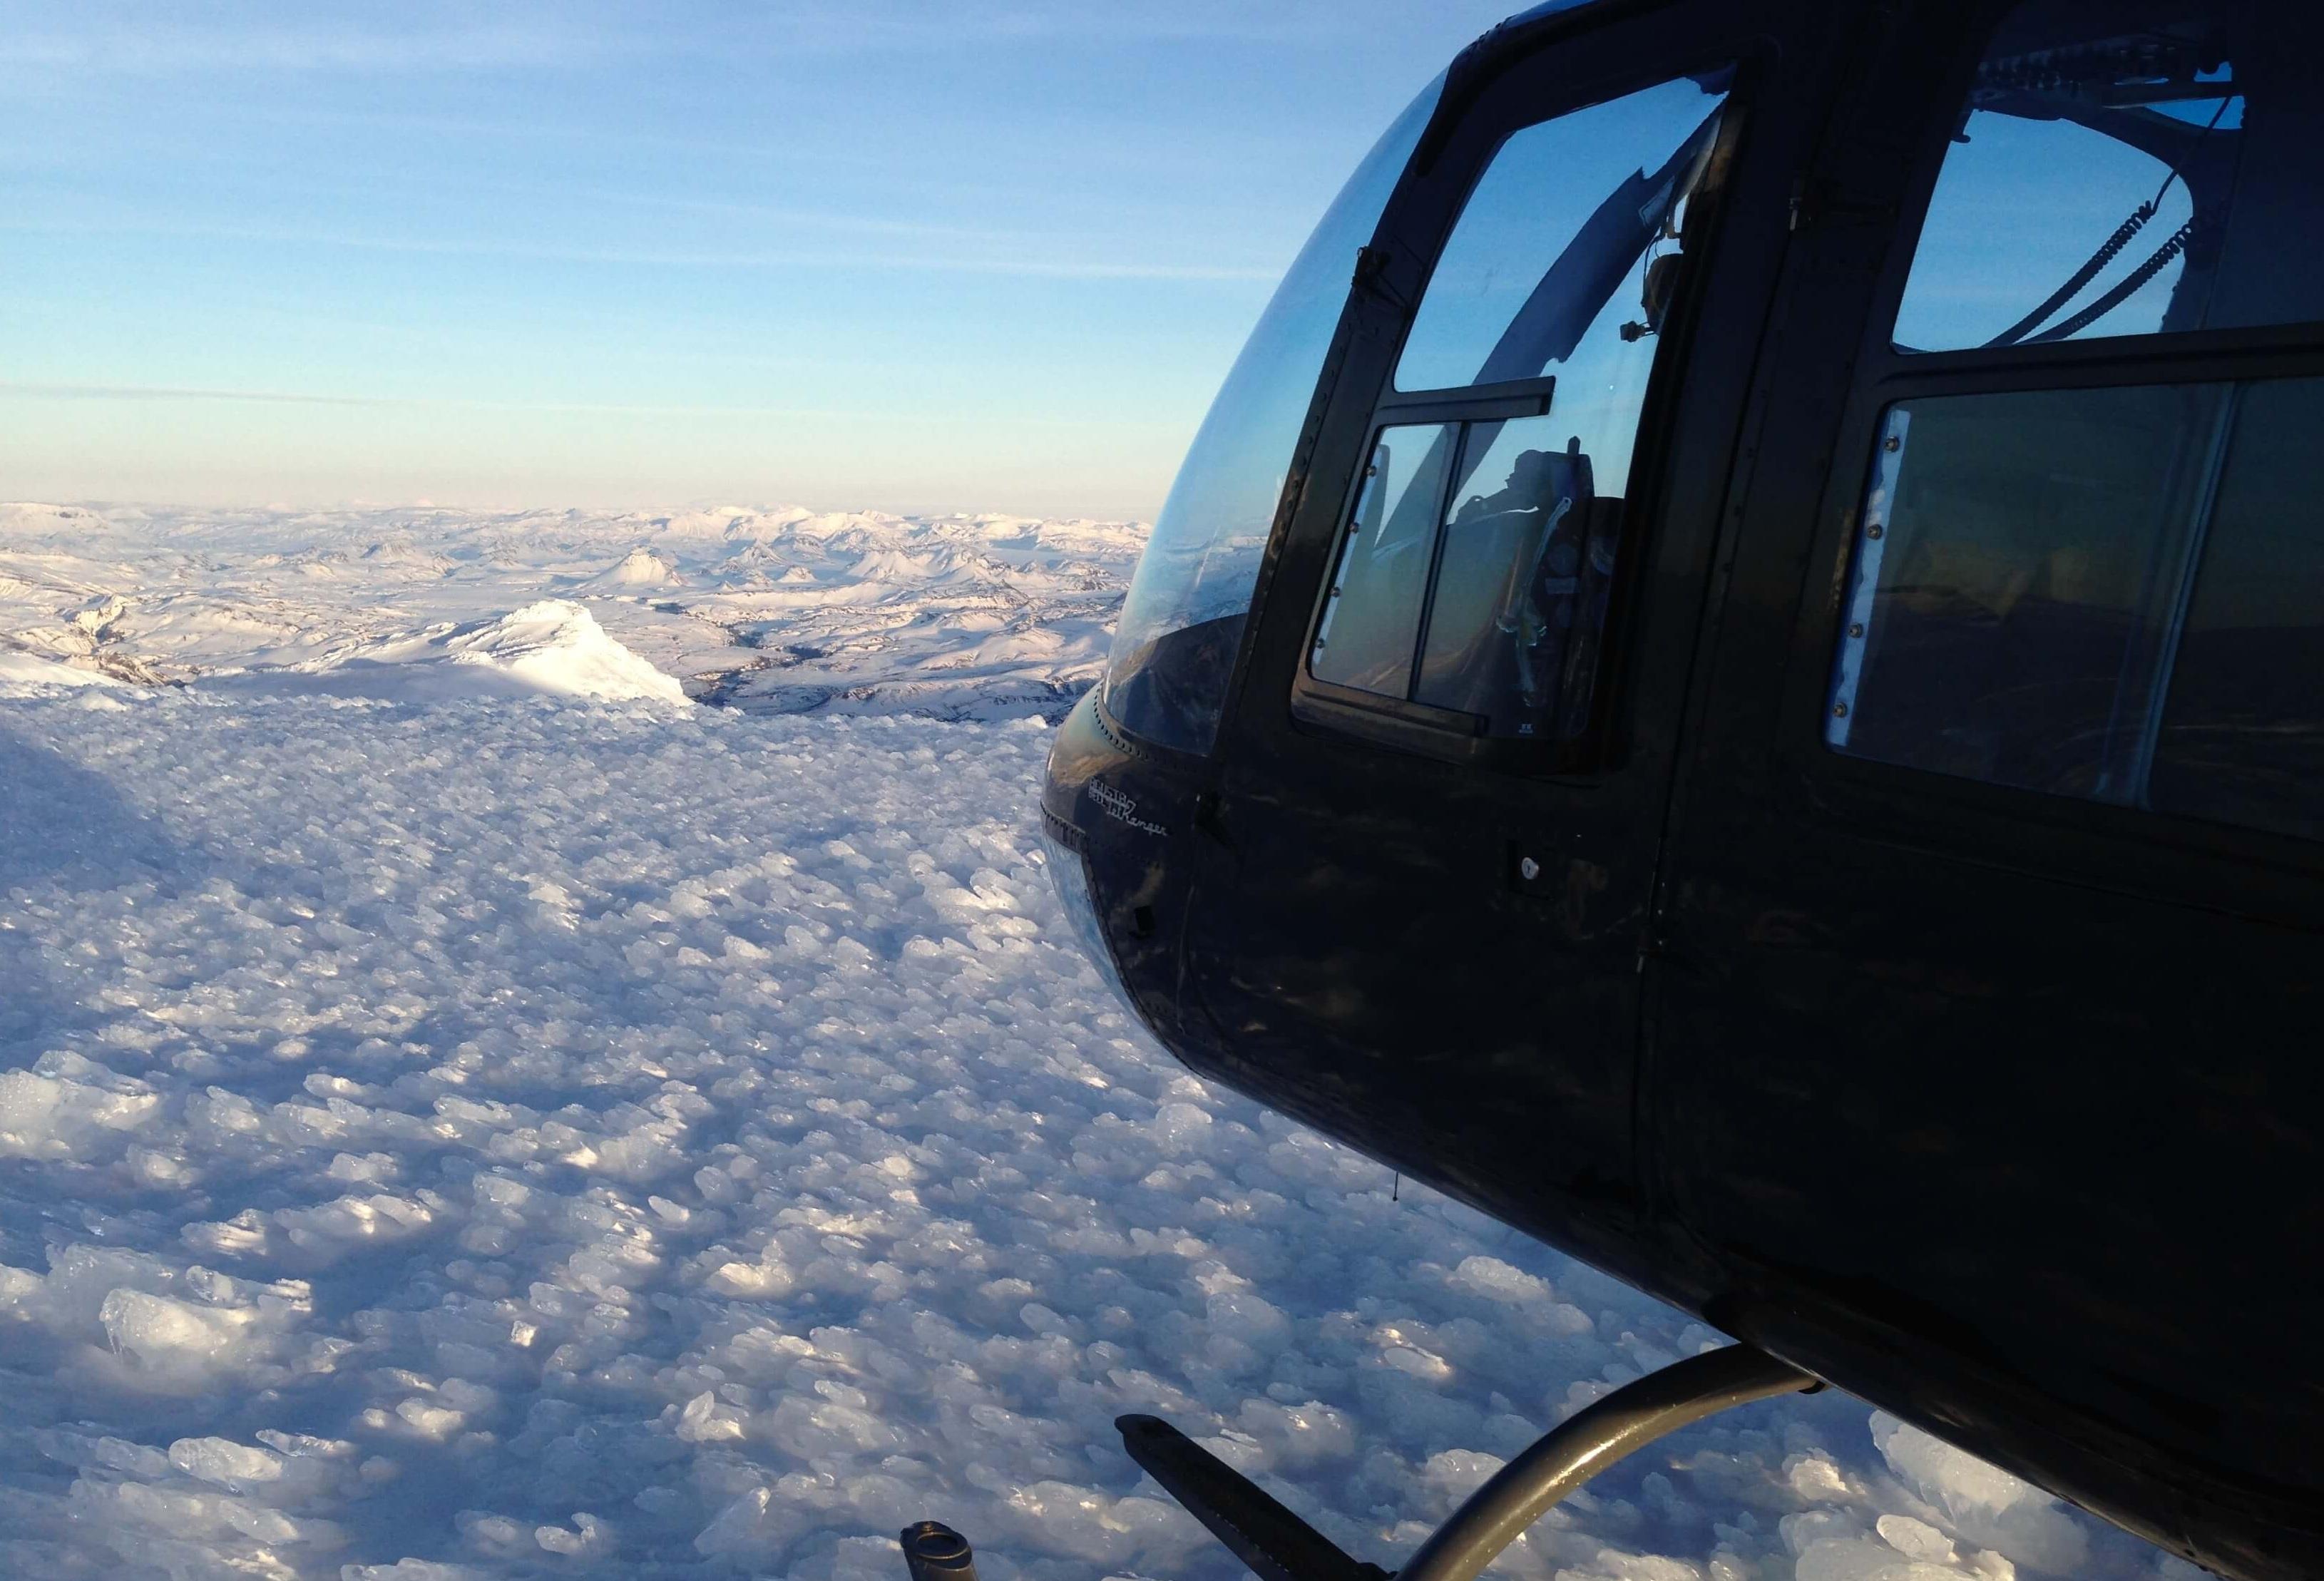 Helicopter glacier tour from Reykjavík